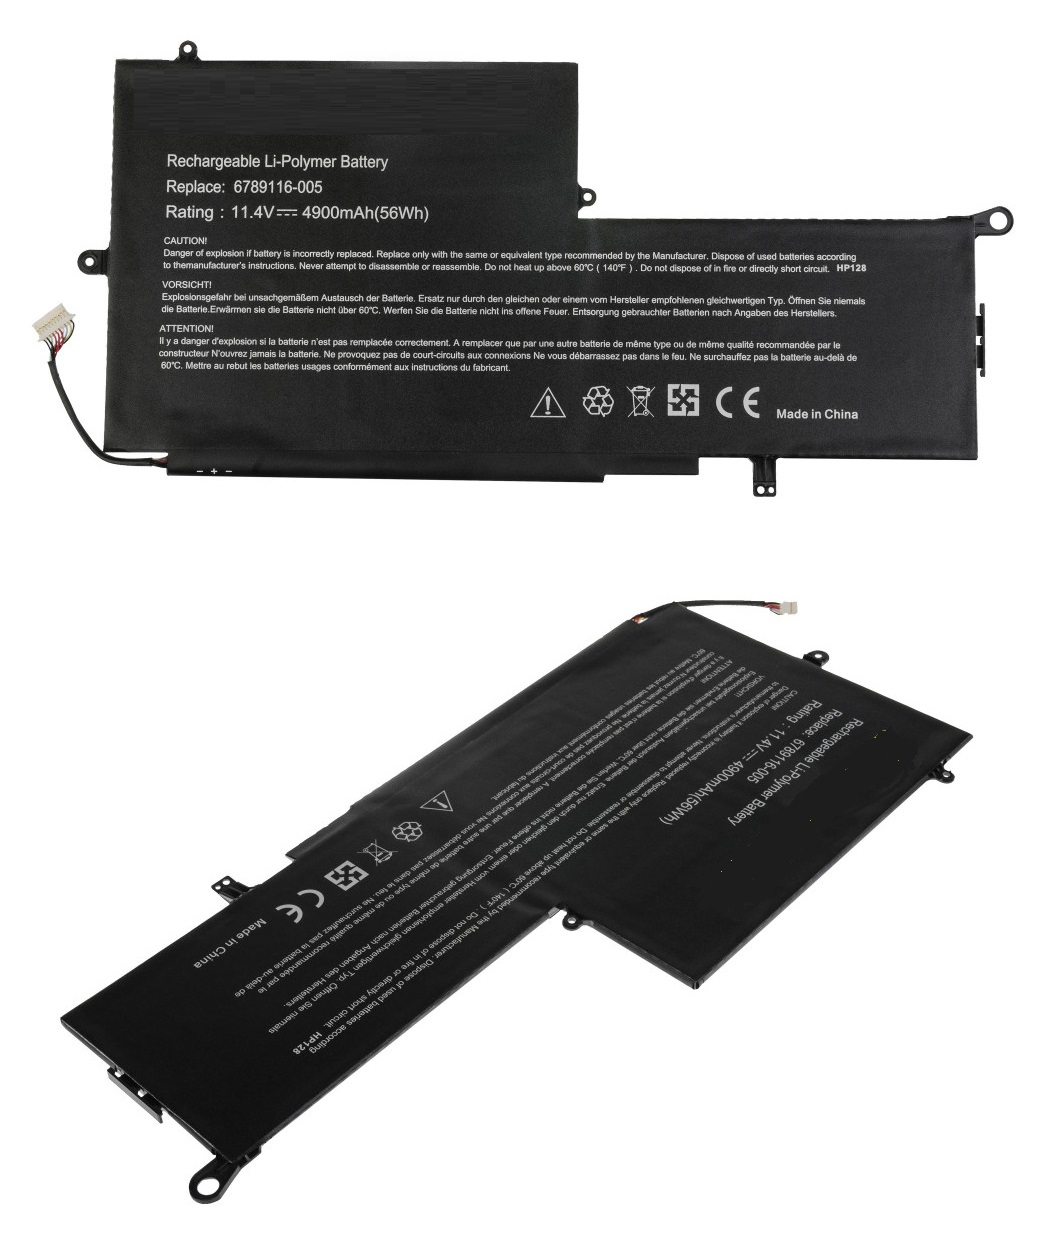 HP Spectre x360 13-000ns L2W20ea Laptop Battery